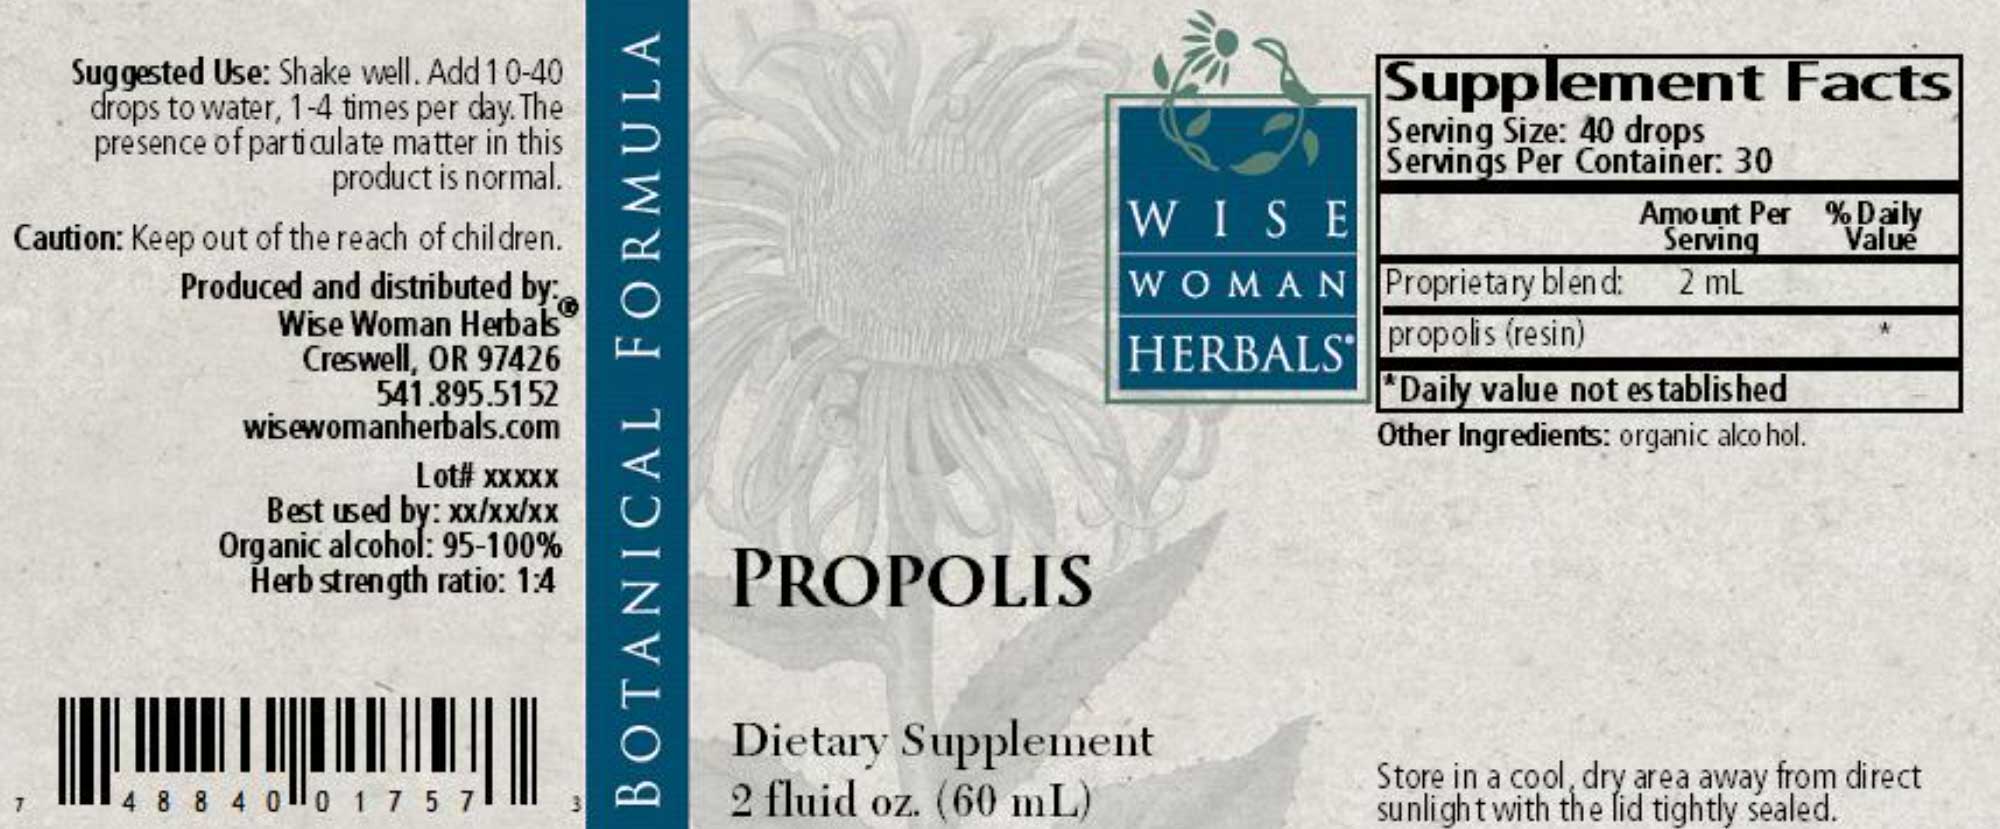 Wise Woman Herbals Propolis Label